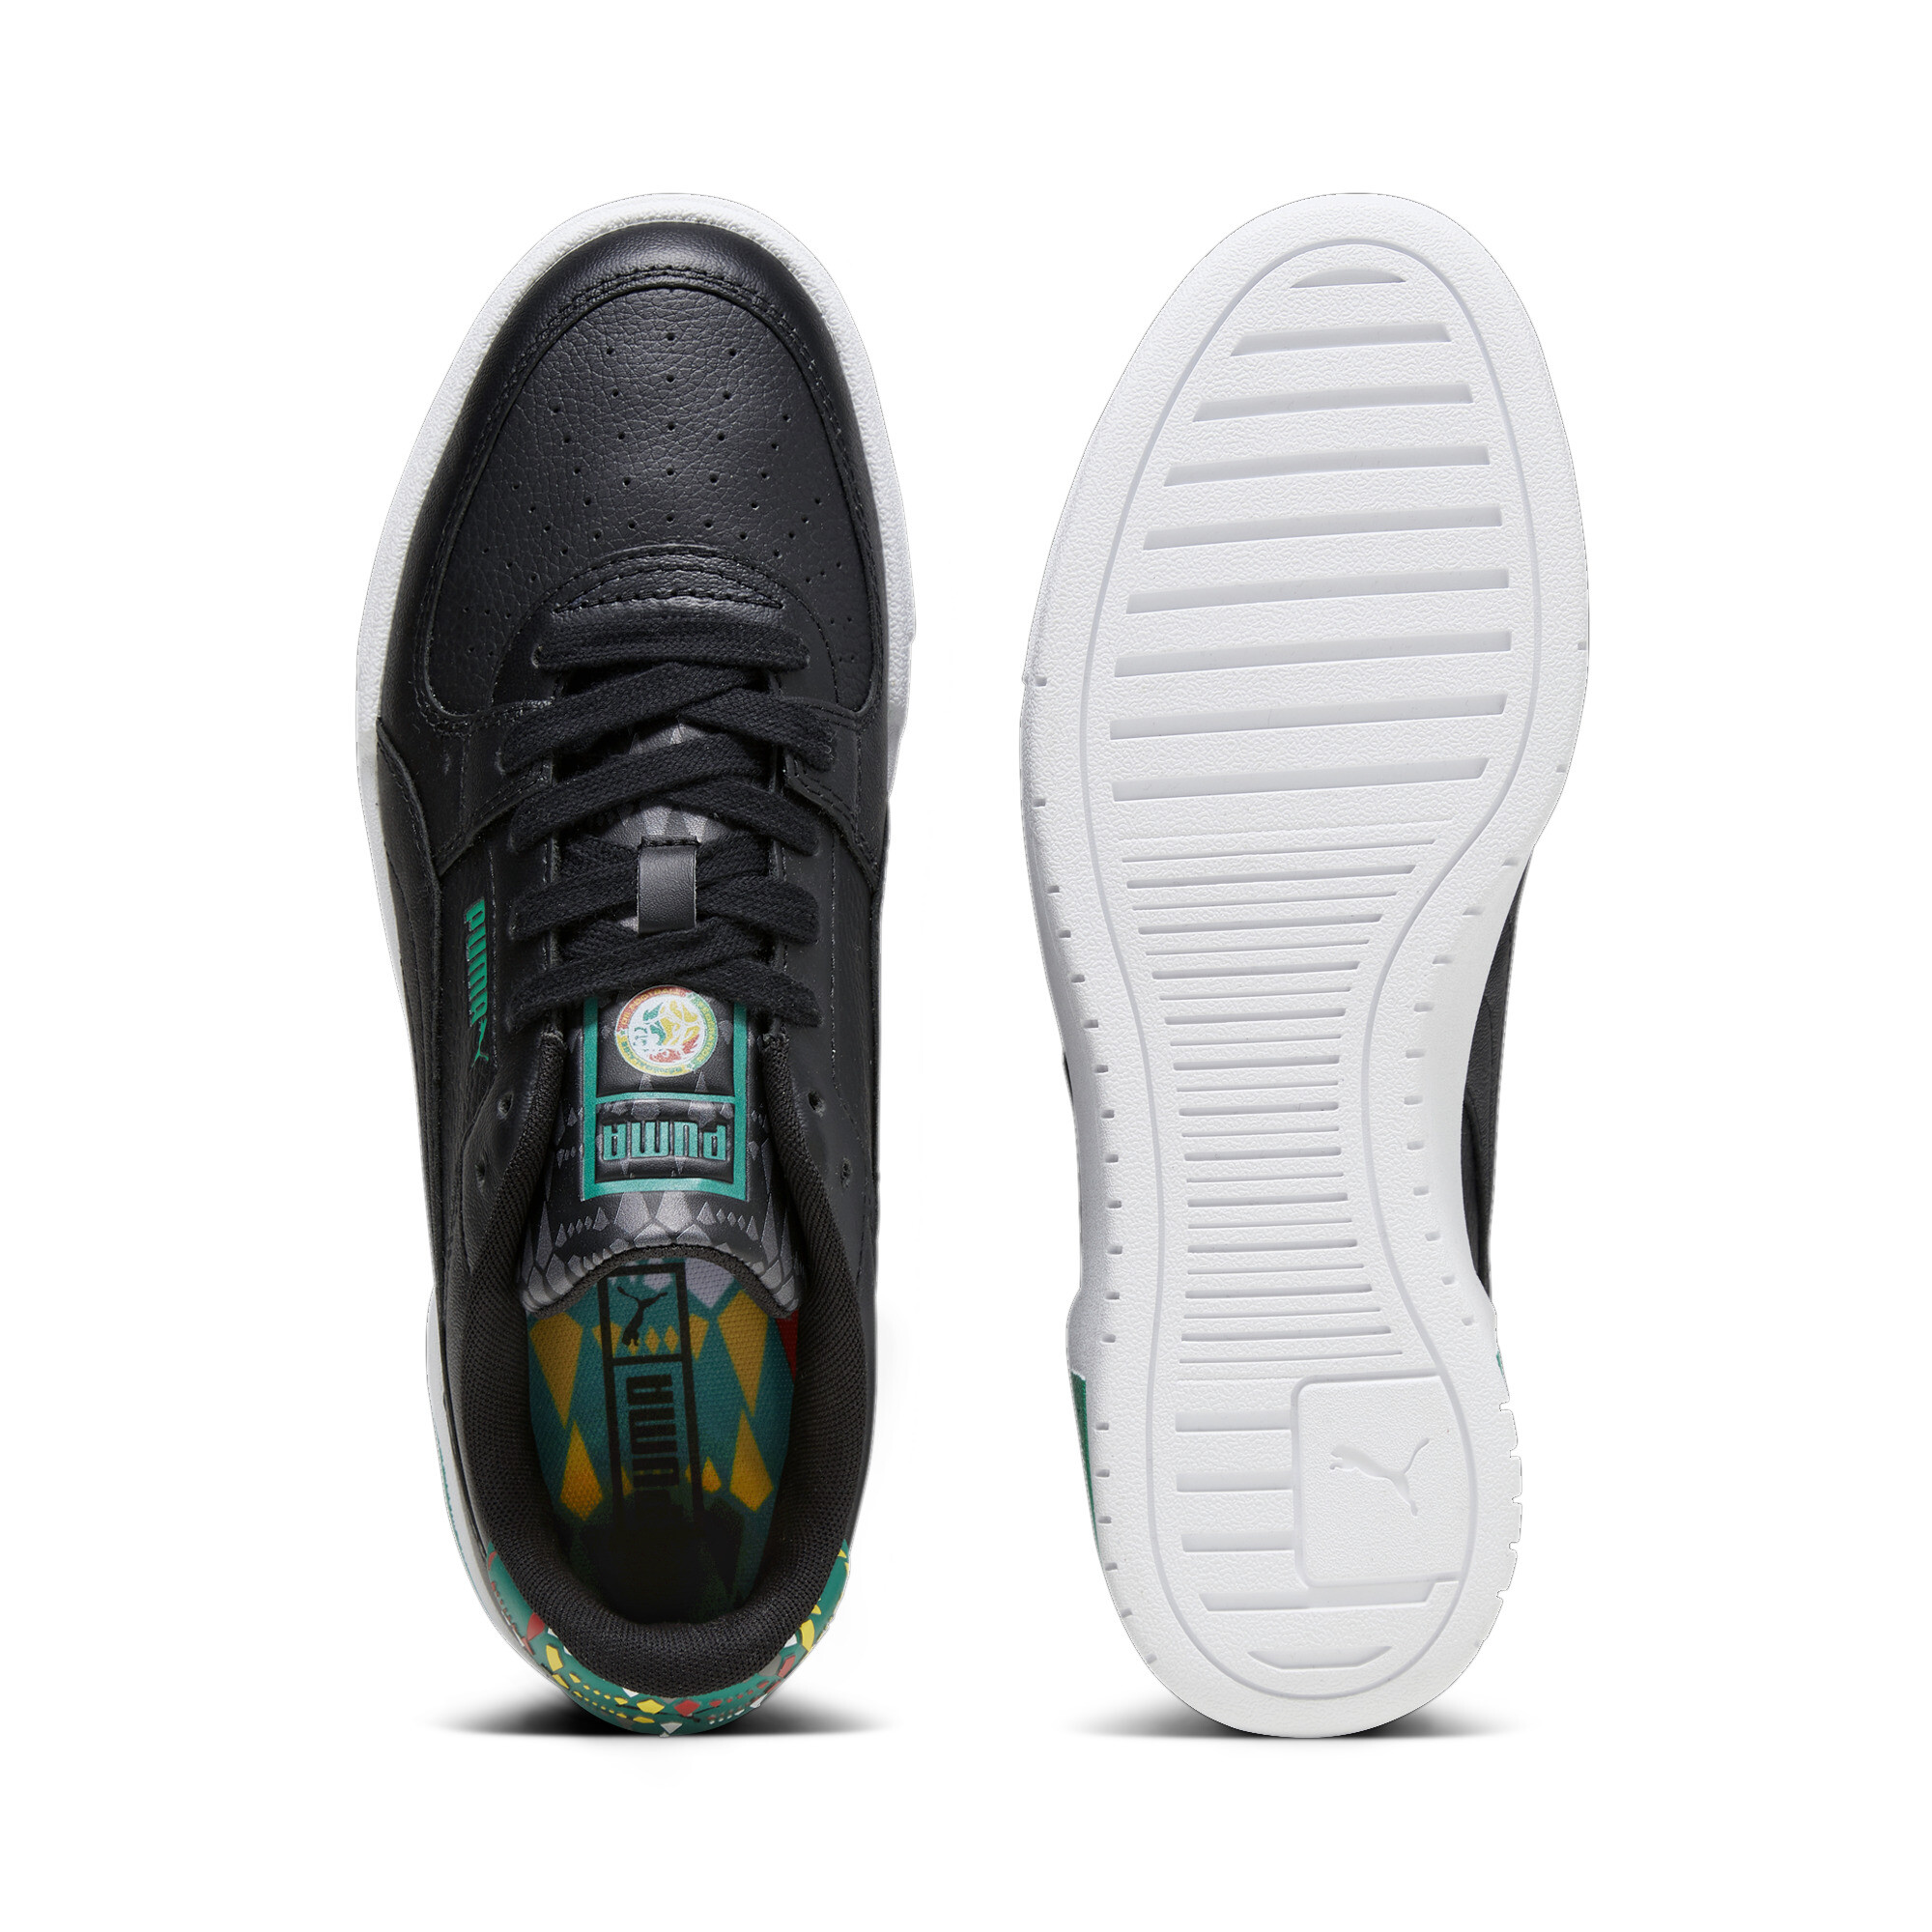 Men's PUMA CA Pro Senegal Football Sneakers In Black, Size EU 40.5